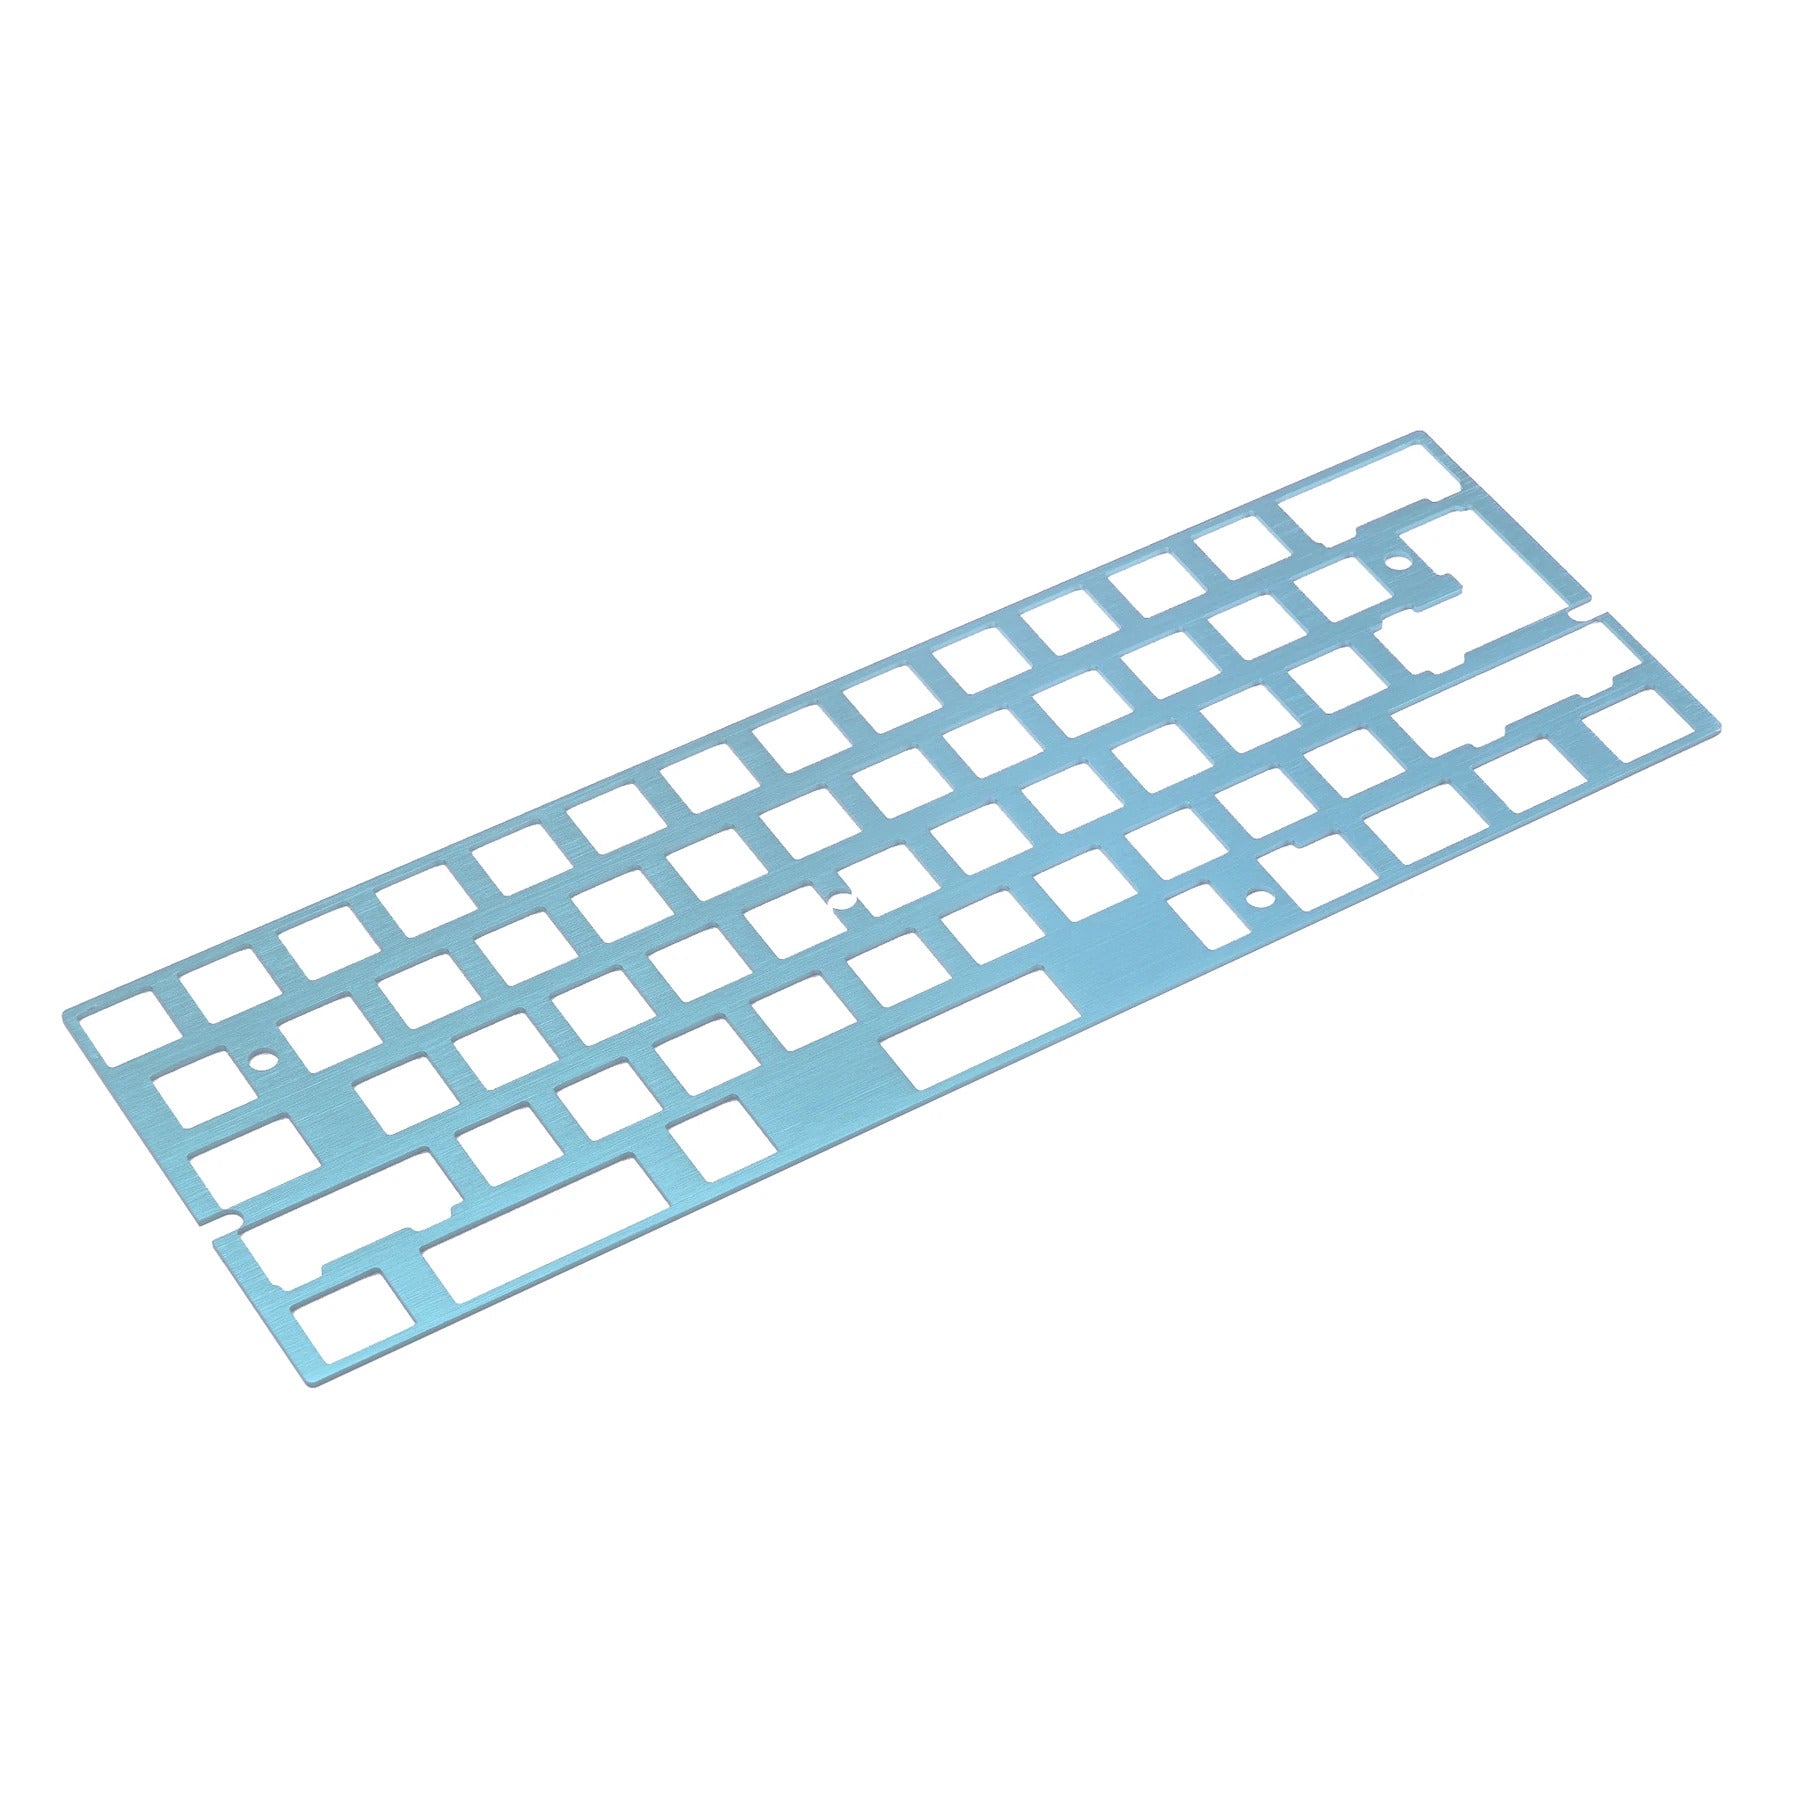 Cyan universal 60% aluminium keyboard plate that supports most typical 60% layouts.